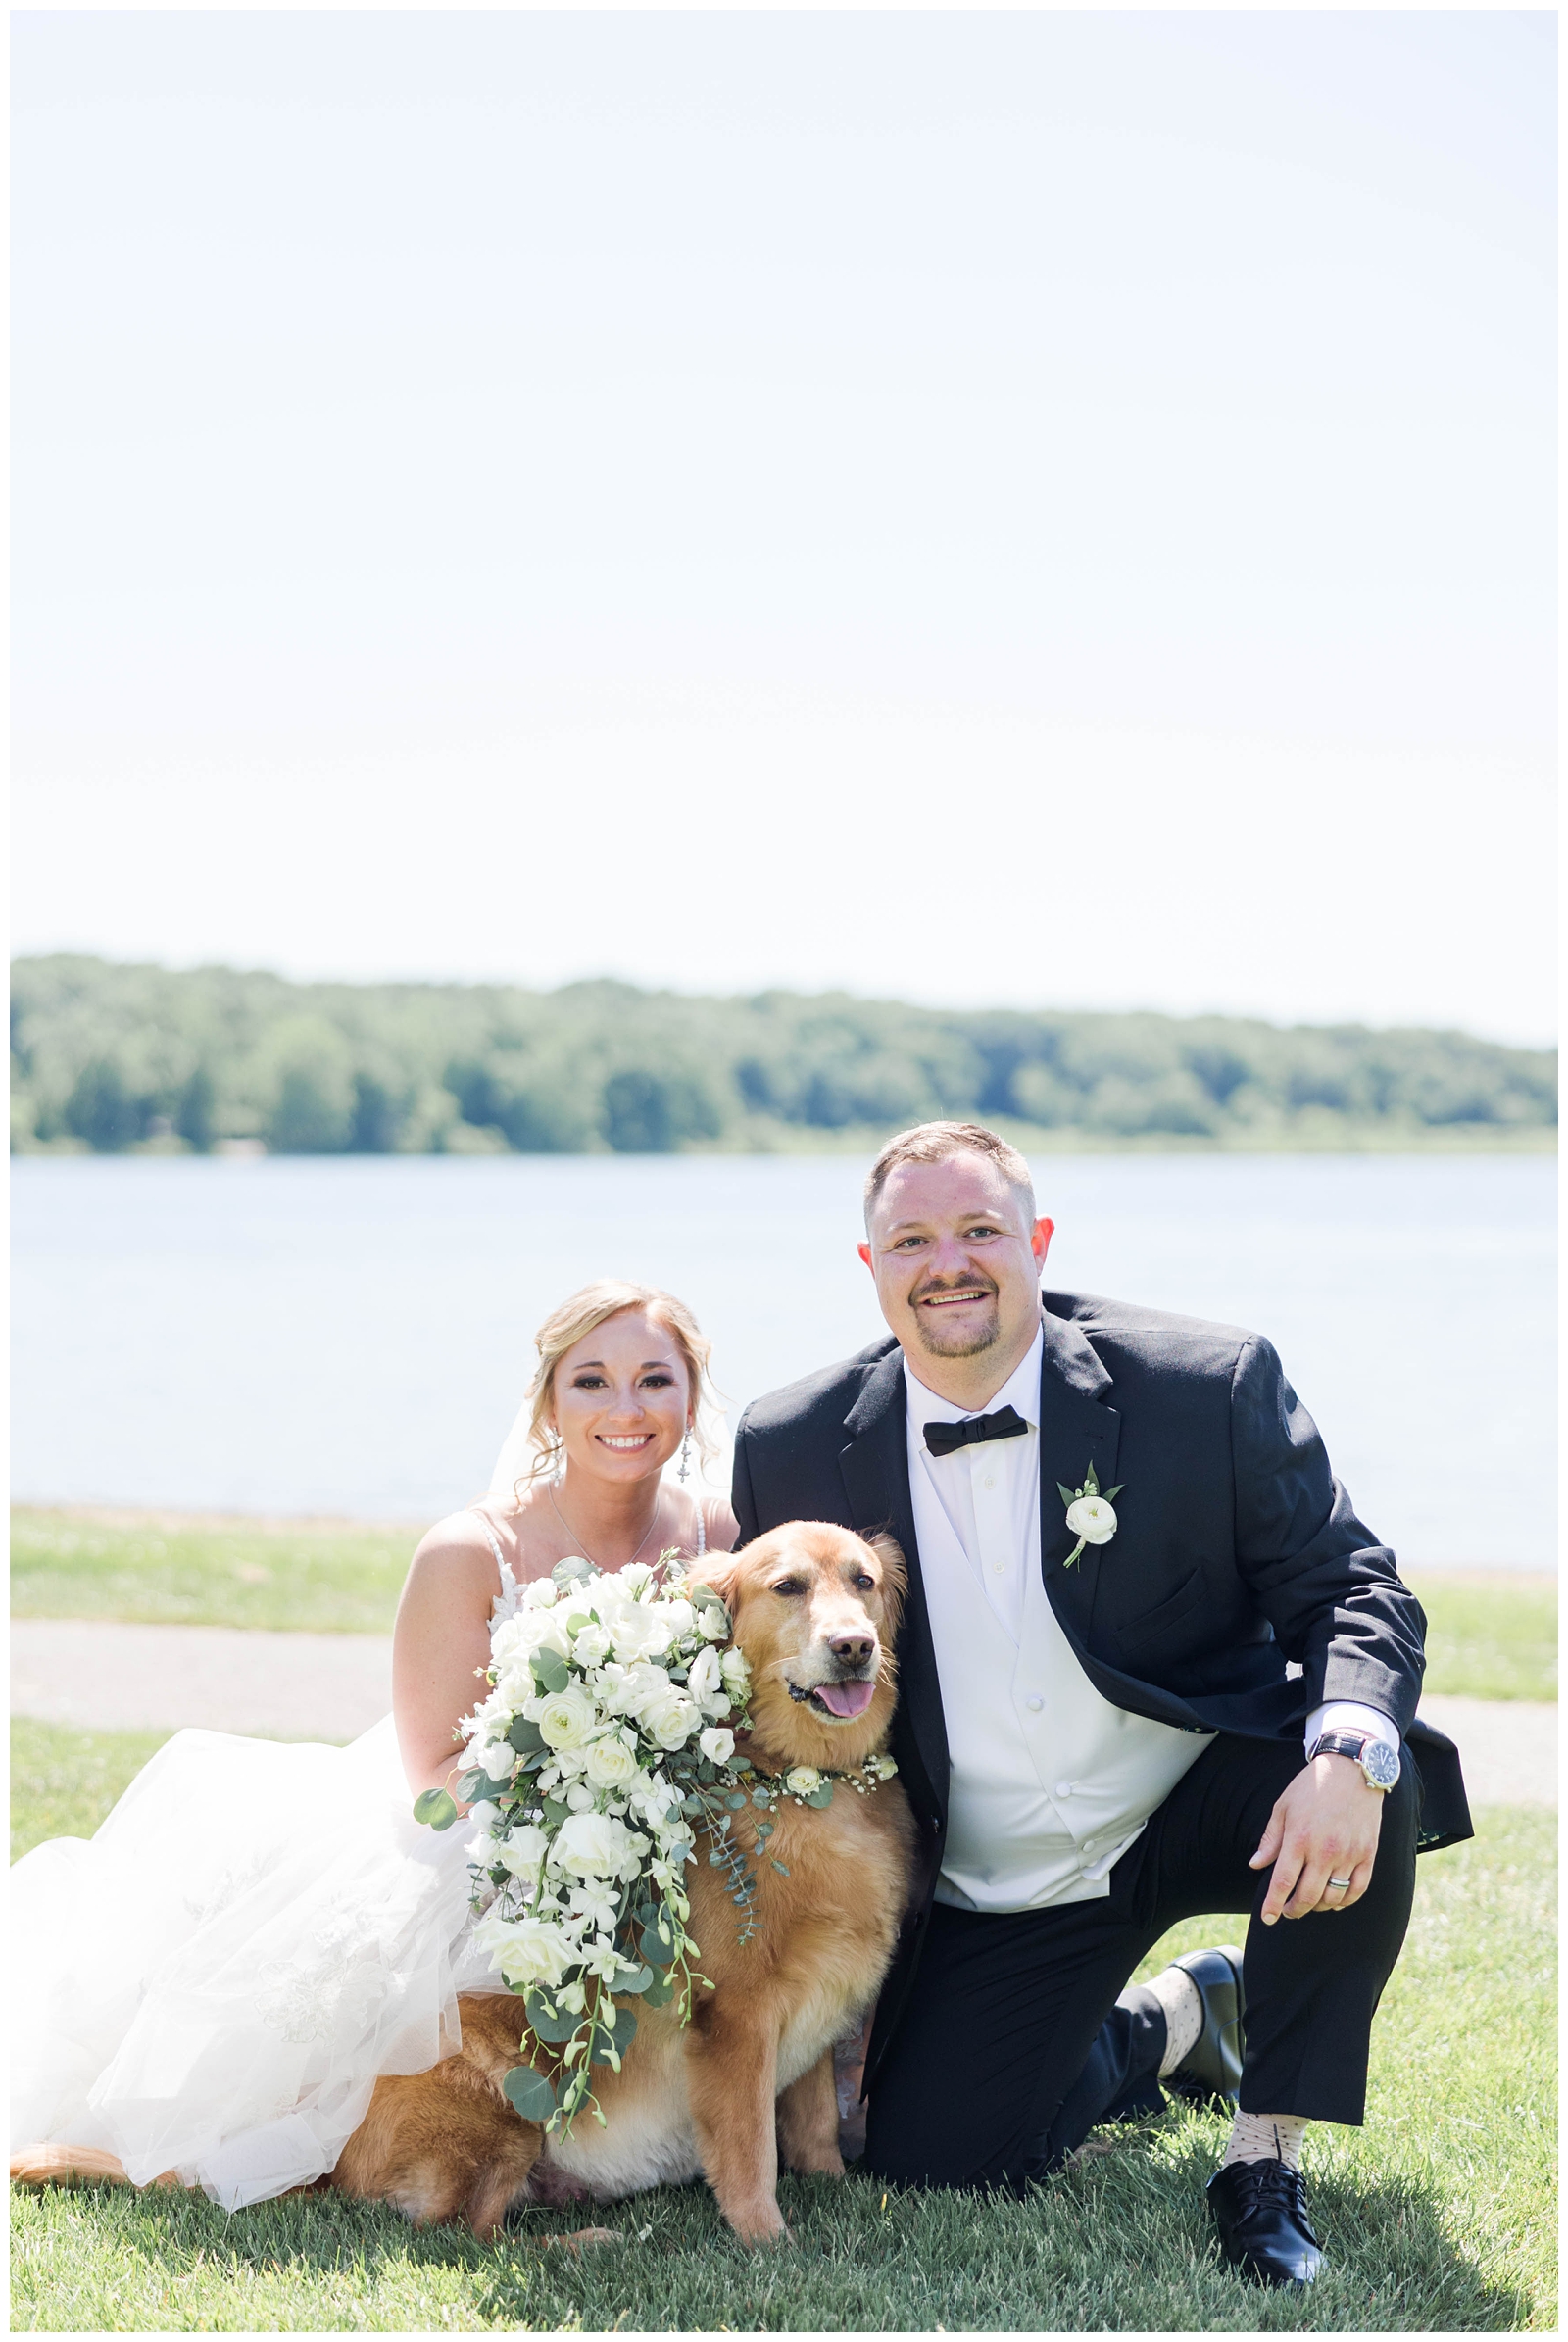 Bride and groom wedding photo with dog